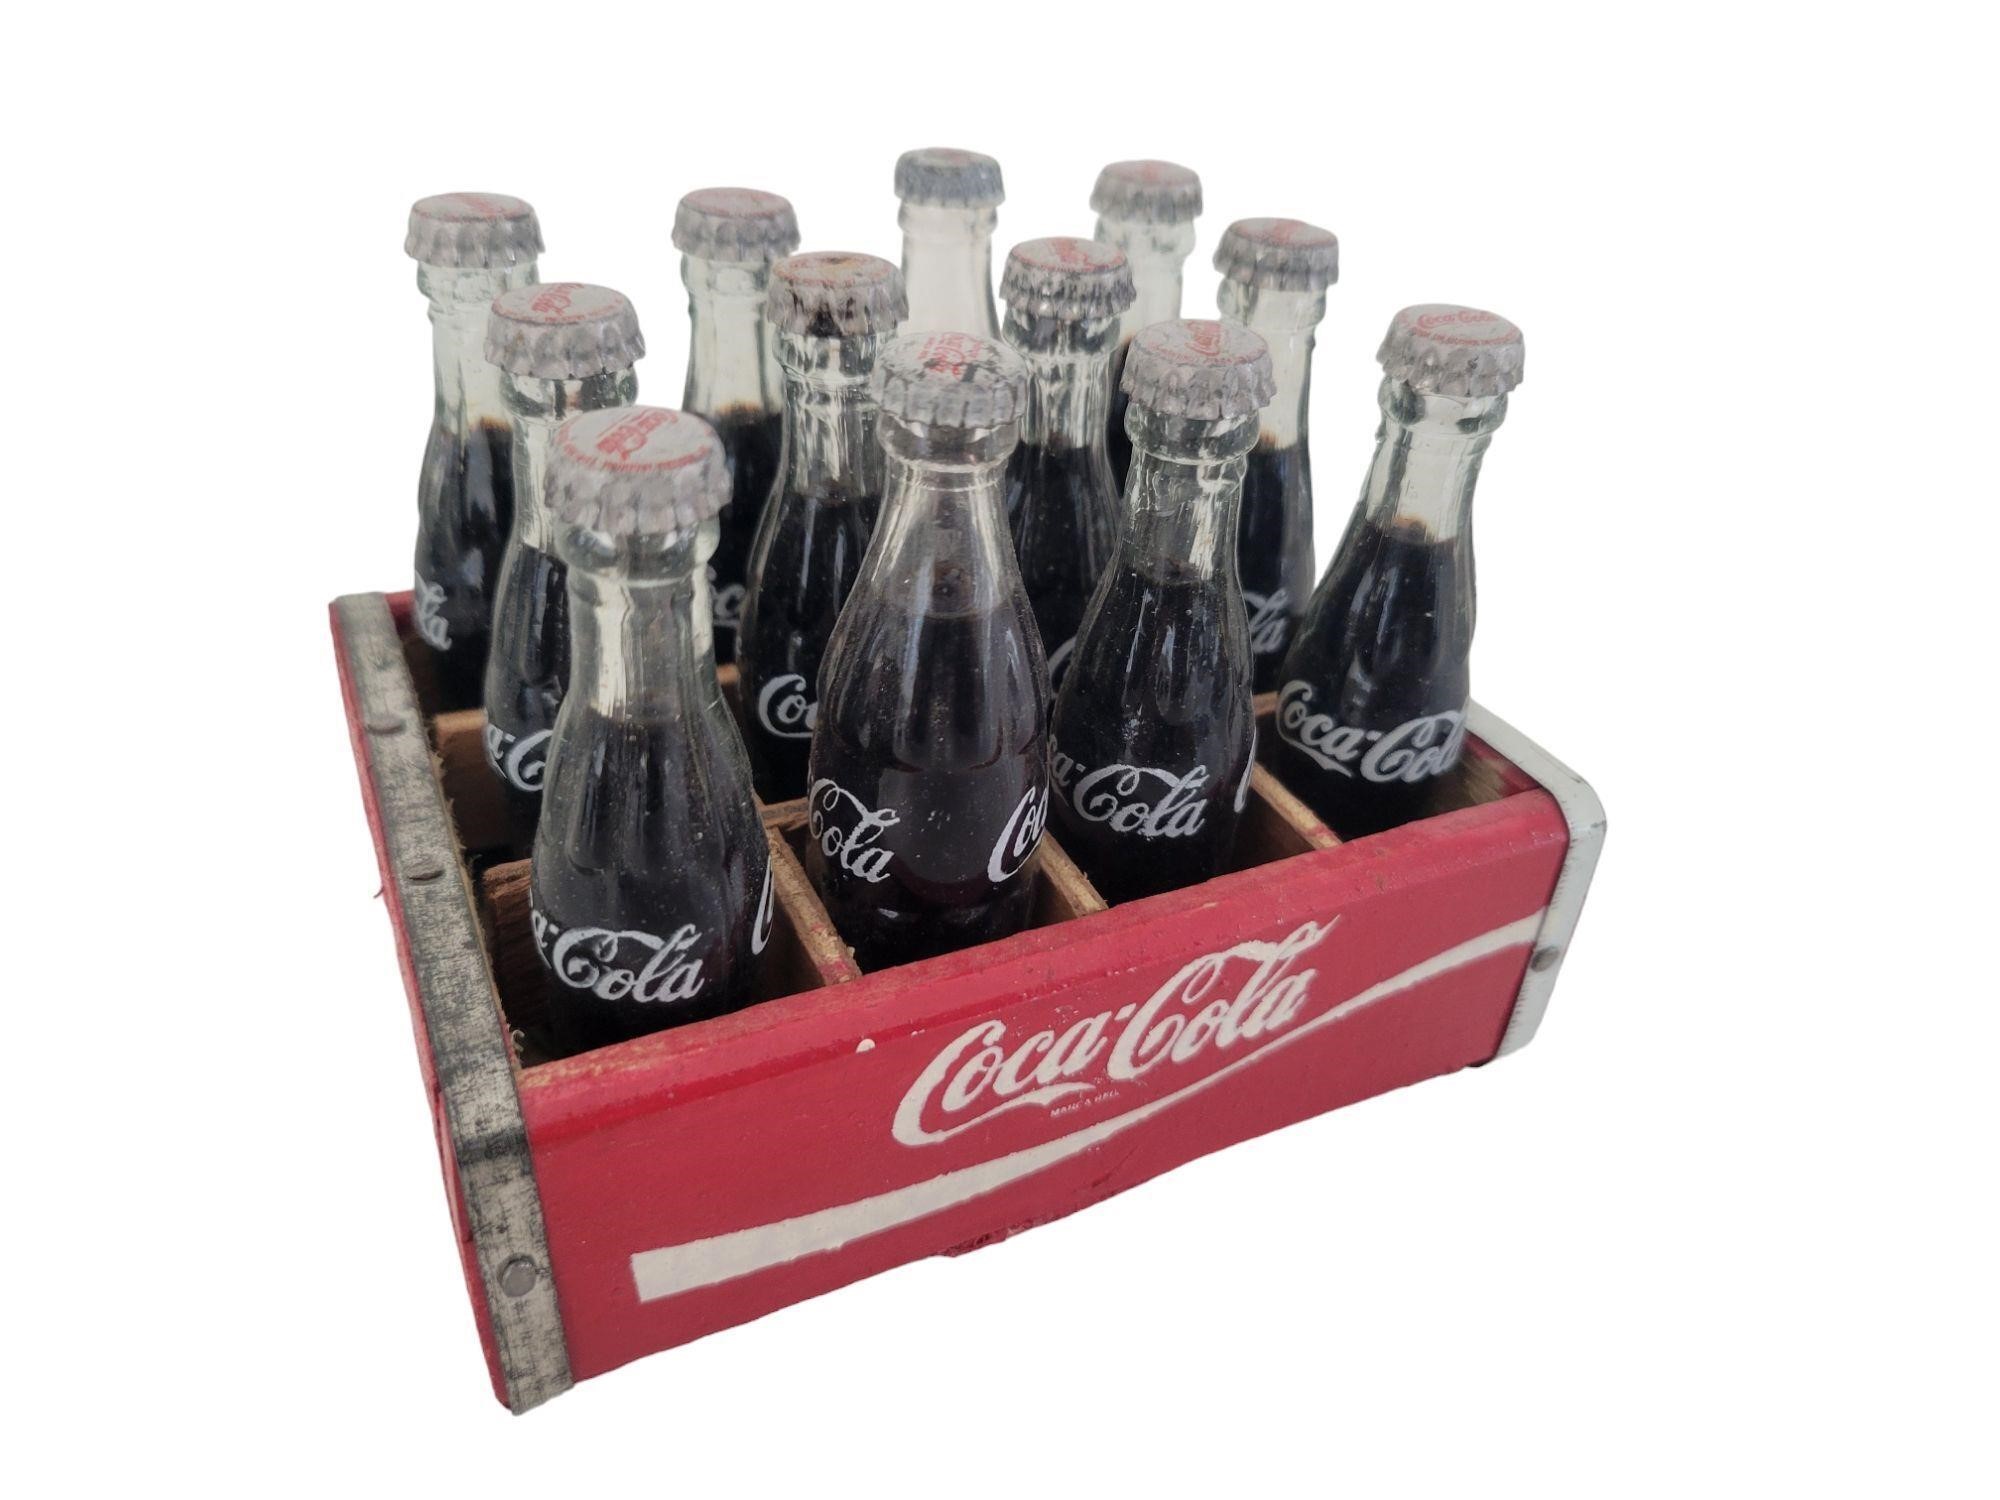 Vintage Argentina Minni Coca Cola Bottle Crate